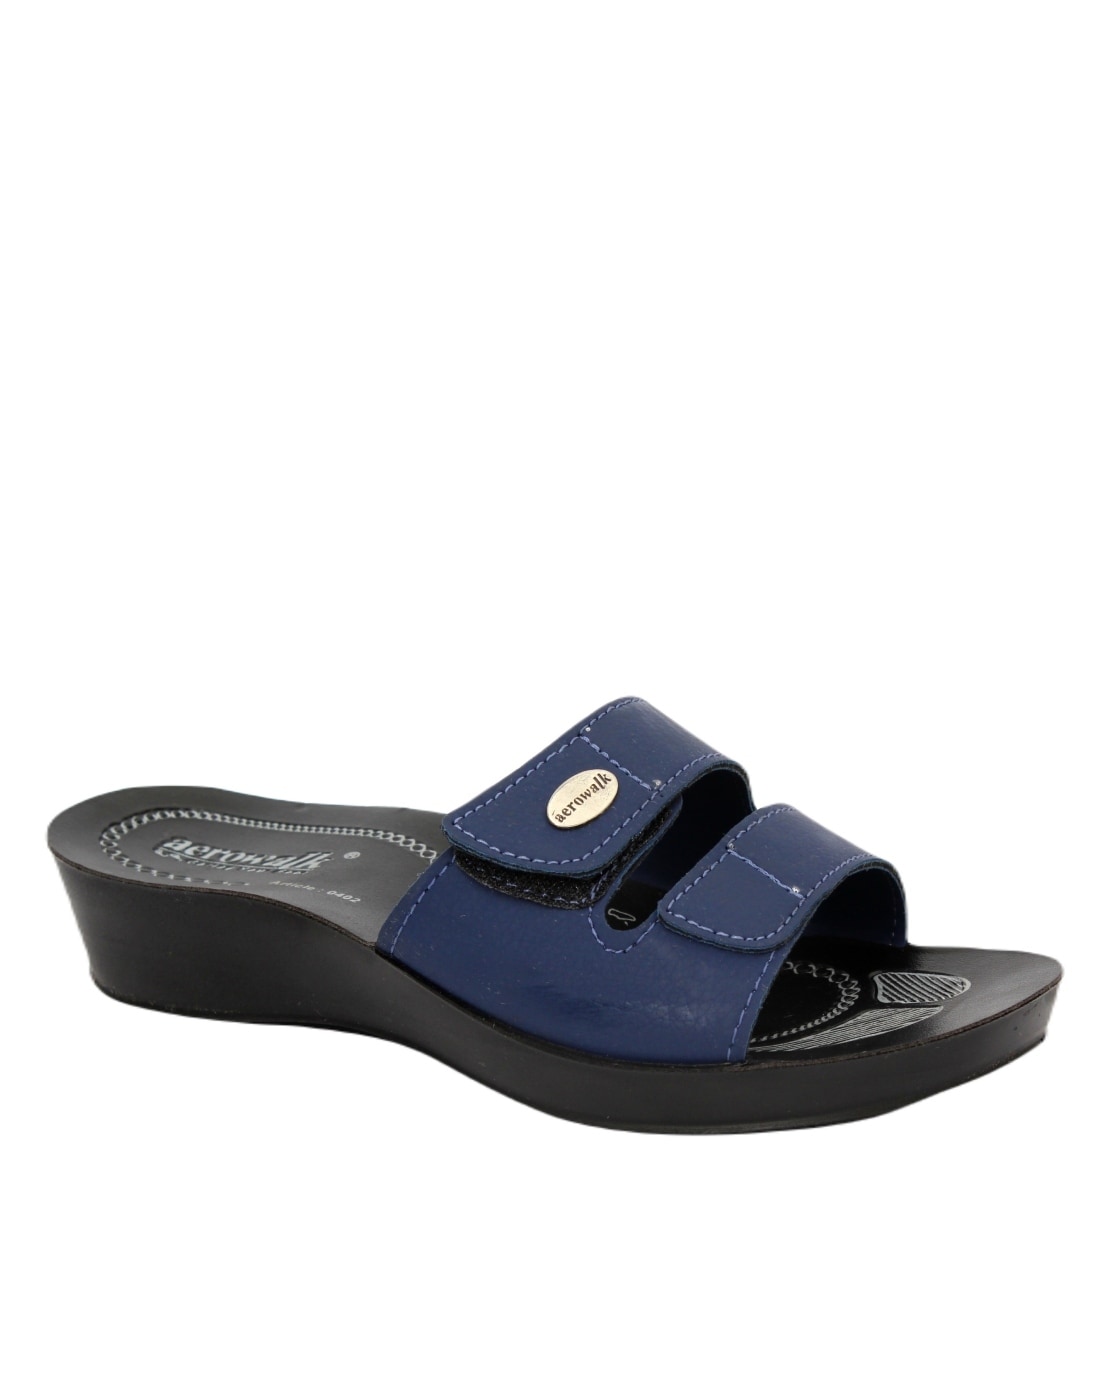 Aerowalk Women Sandal #AT84 - BLACK – The Condor Trendz Store